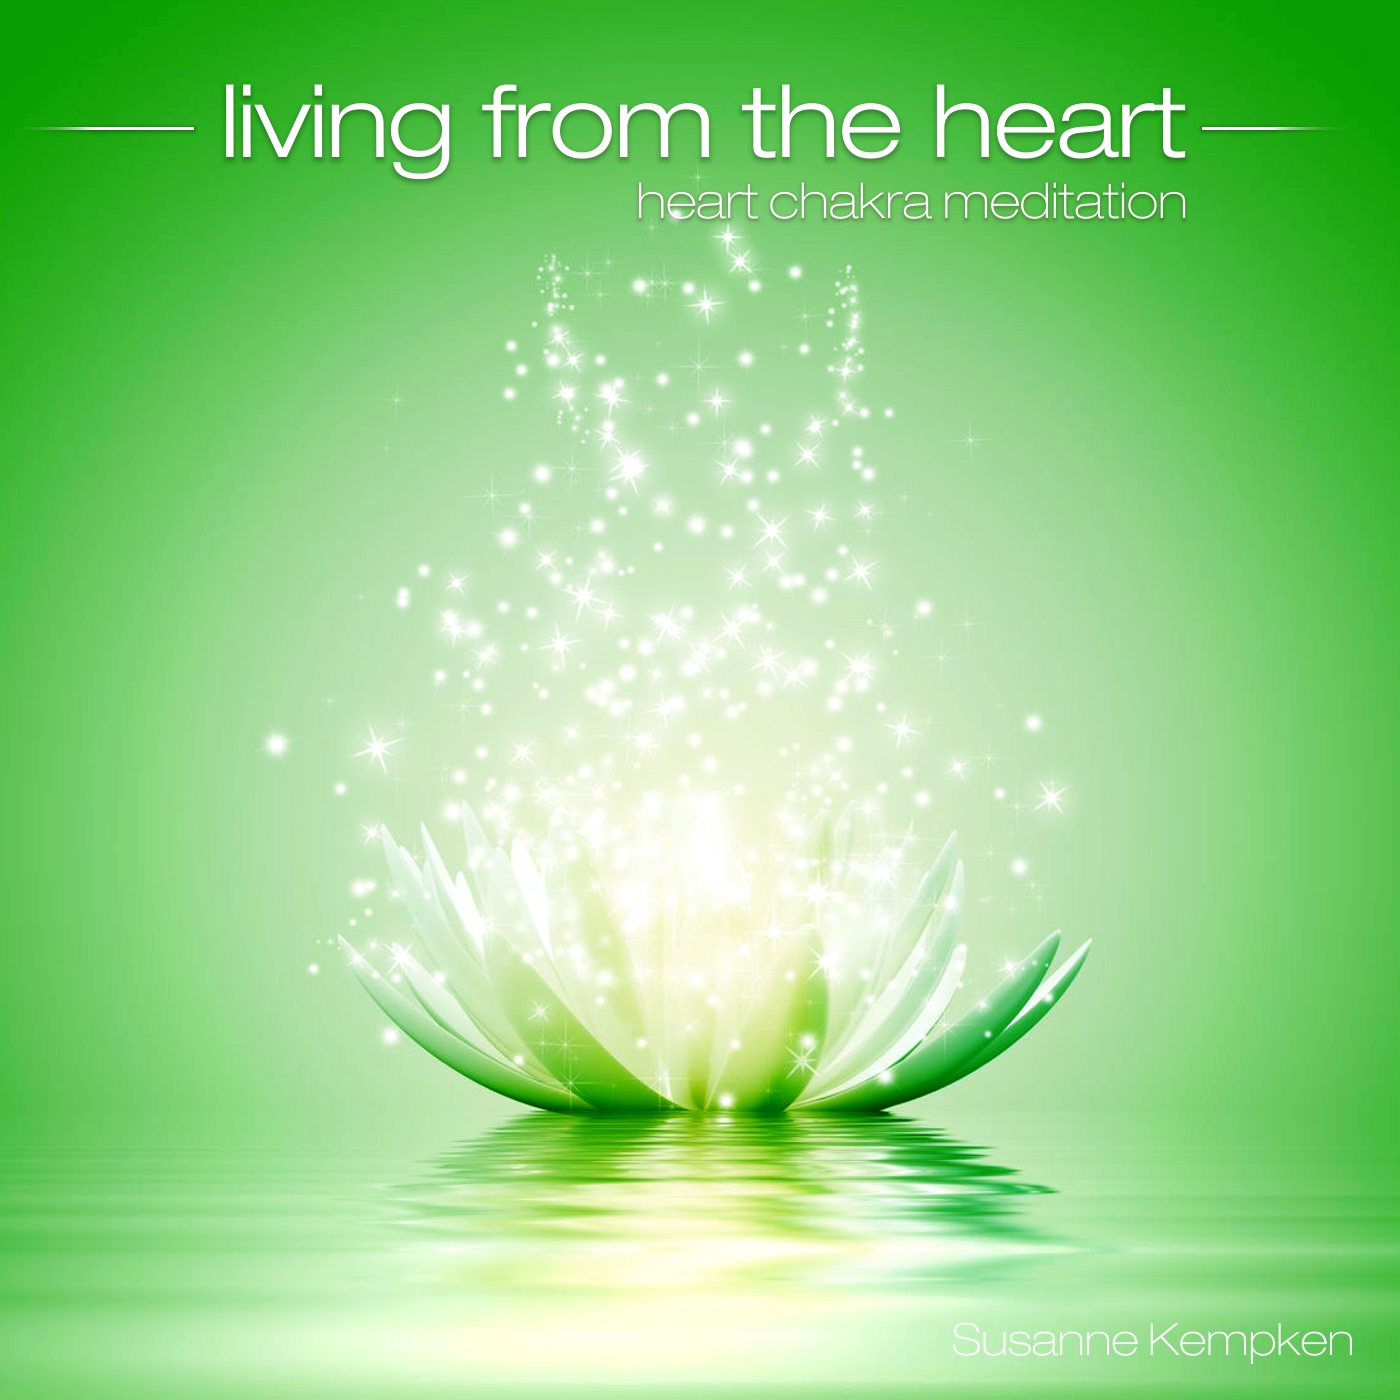 Living from the Heart - Heart Chakra Meditation by Susanne Kempken